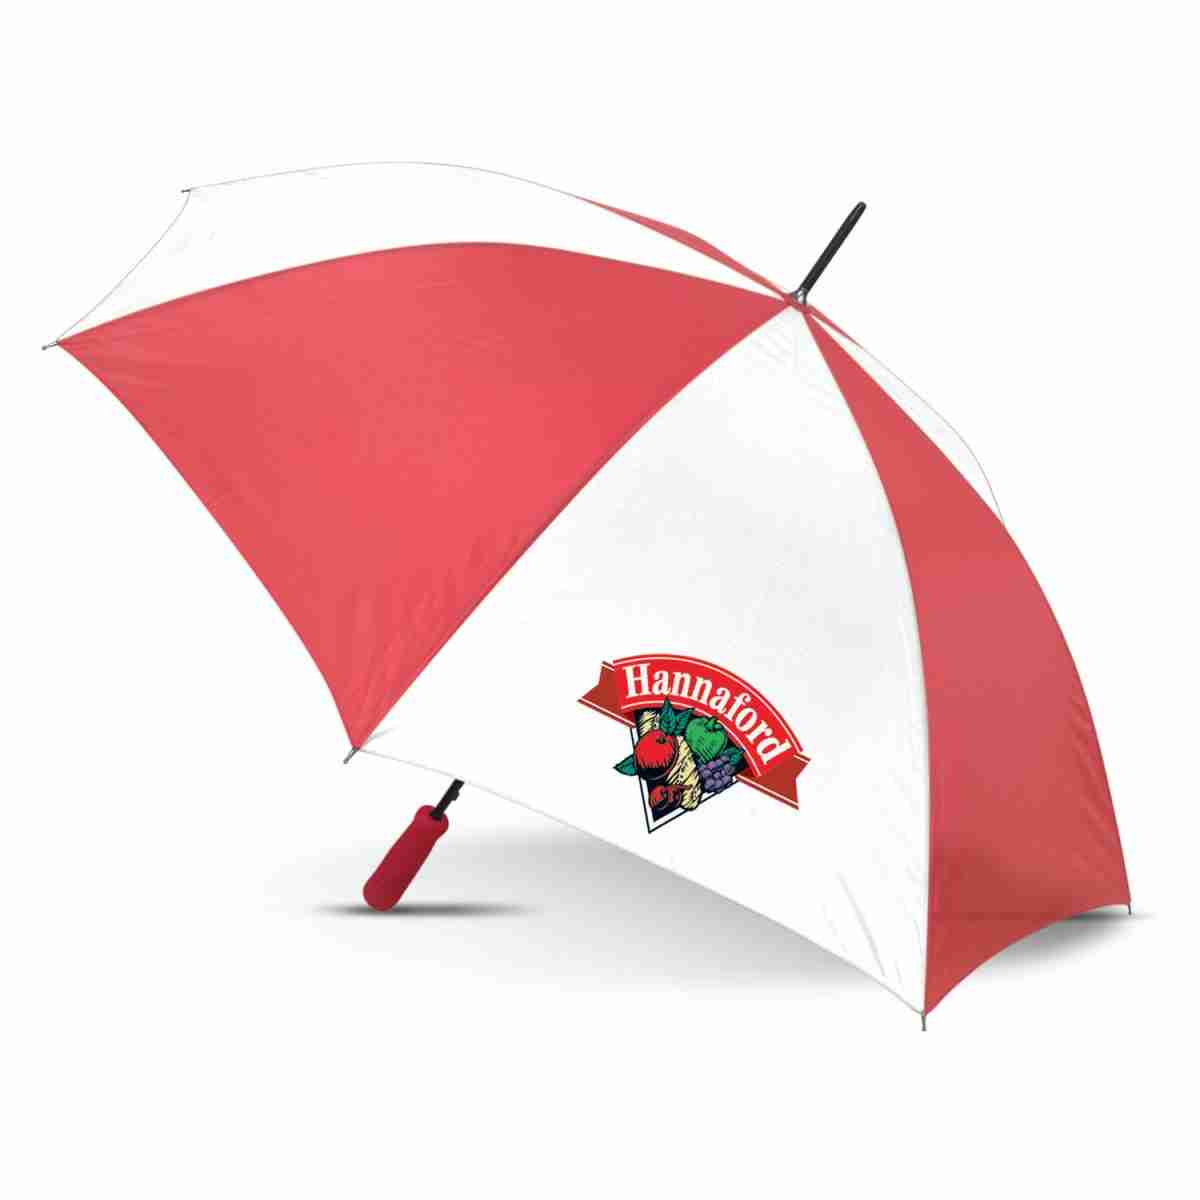 Nimbus Umbrella